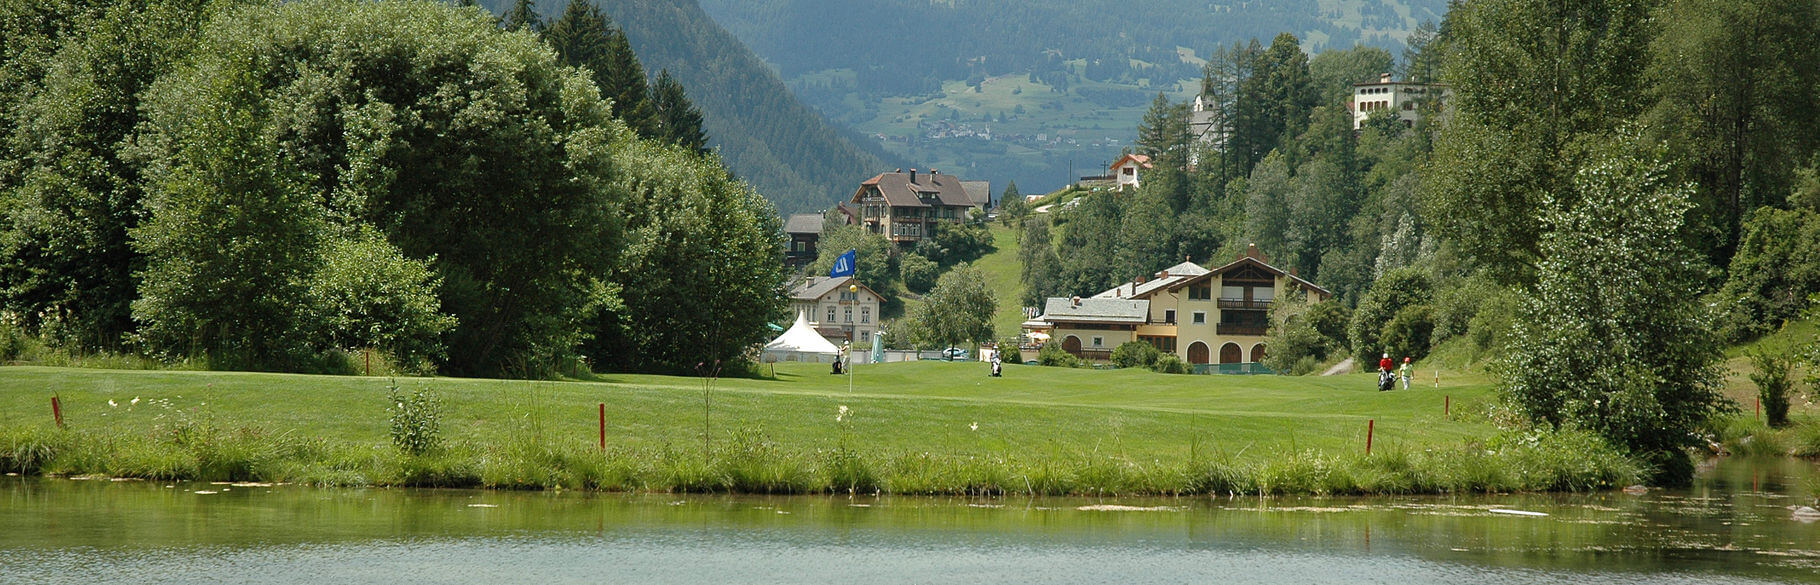 Golfplatz Alvaneu Bad Ausblick.